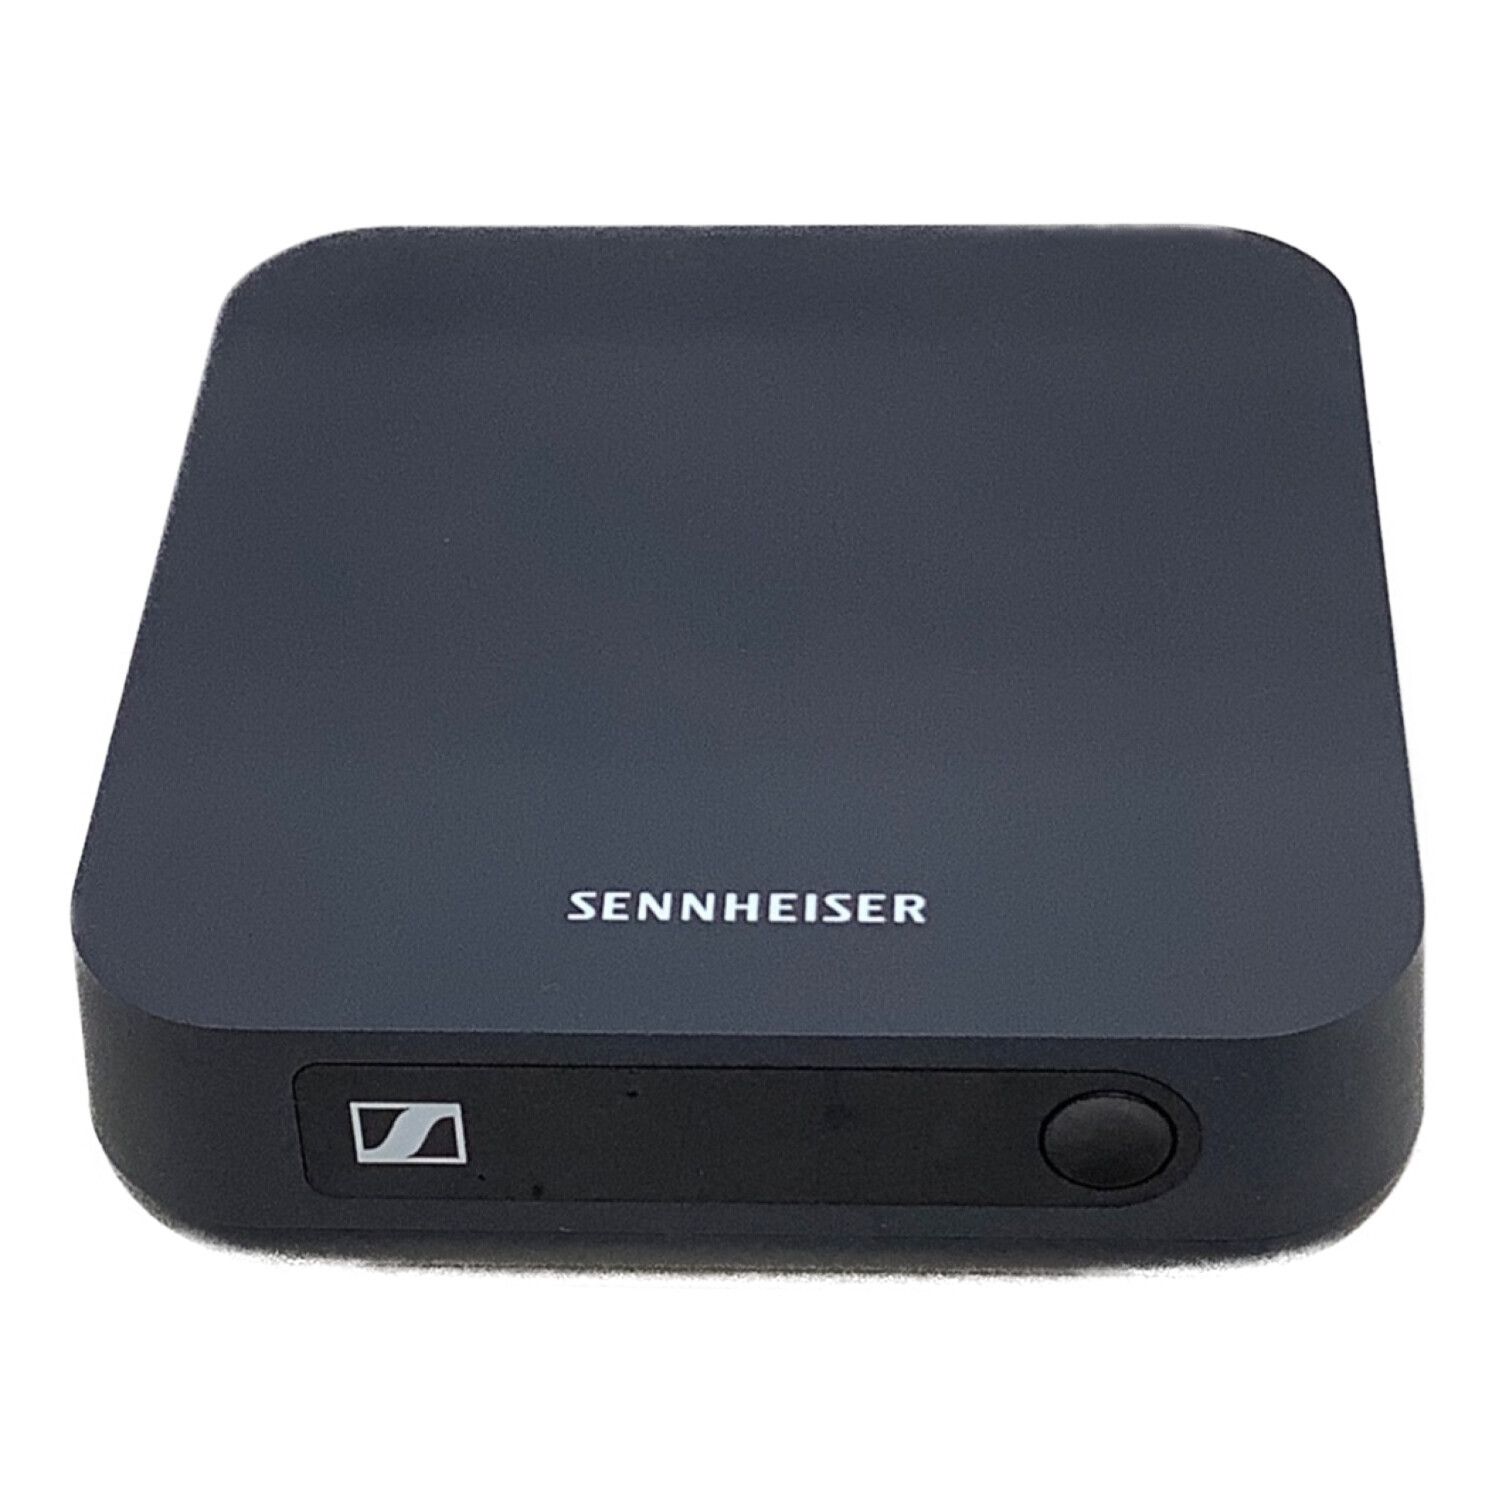 SENNHEISER (ゼンハイザー) オーディオトランスミッター BT T100